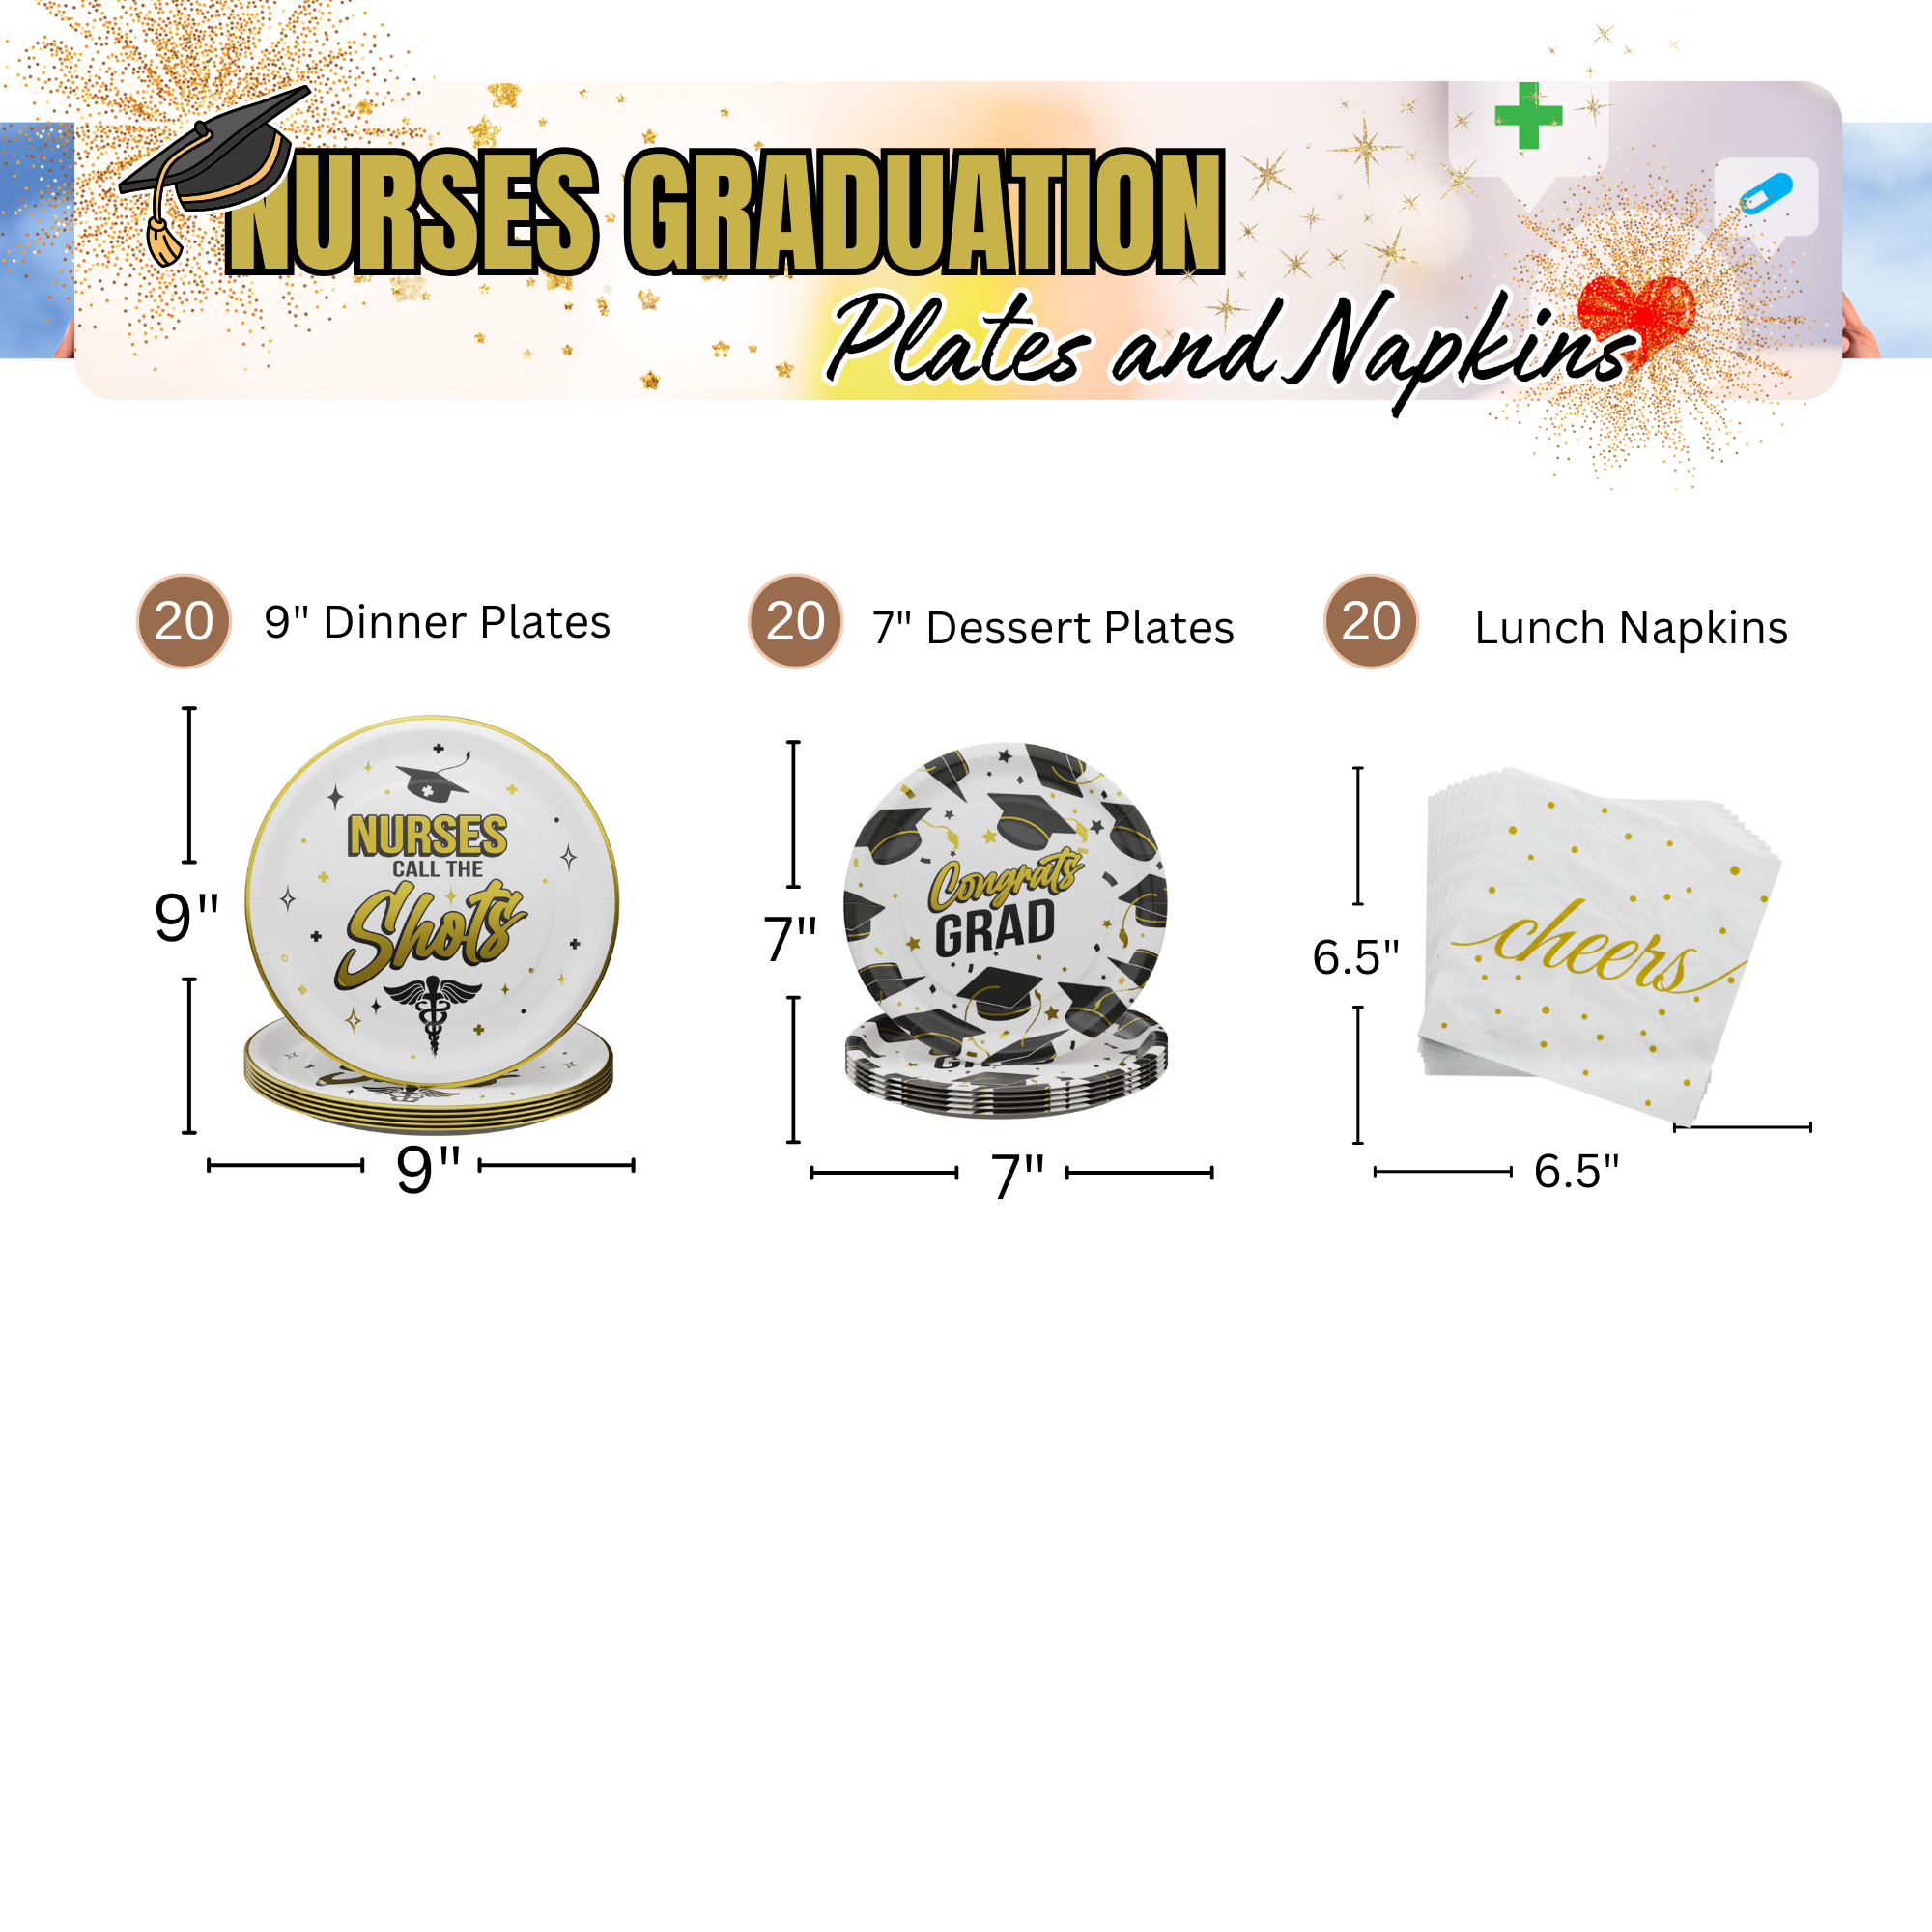 Nurses Graduation Plates and Napkins Pack (60 Pieces for 20 Guests)